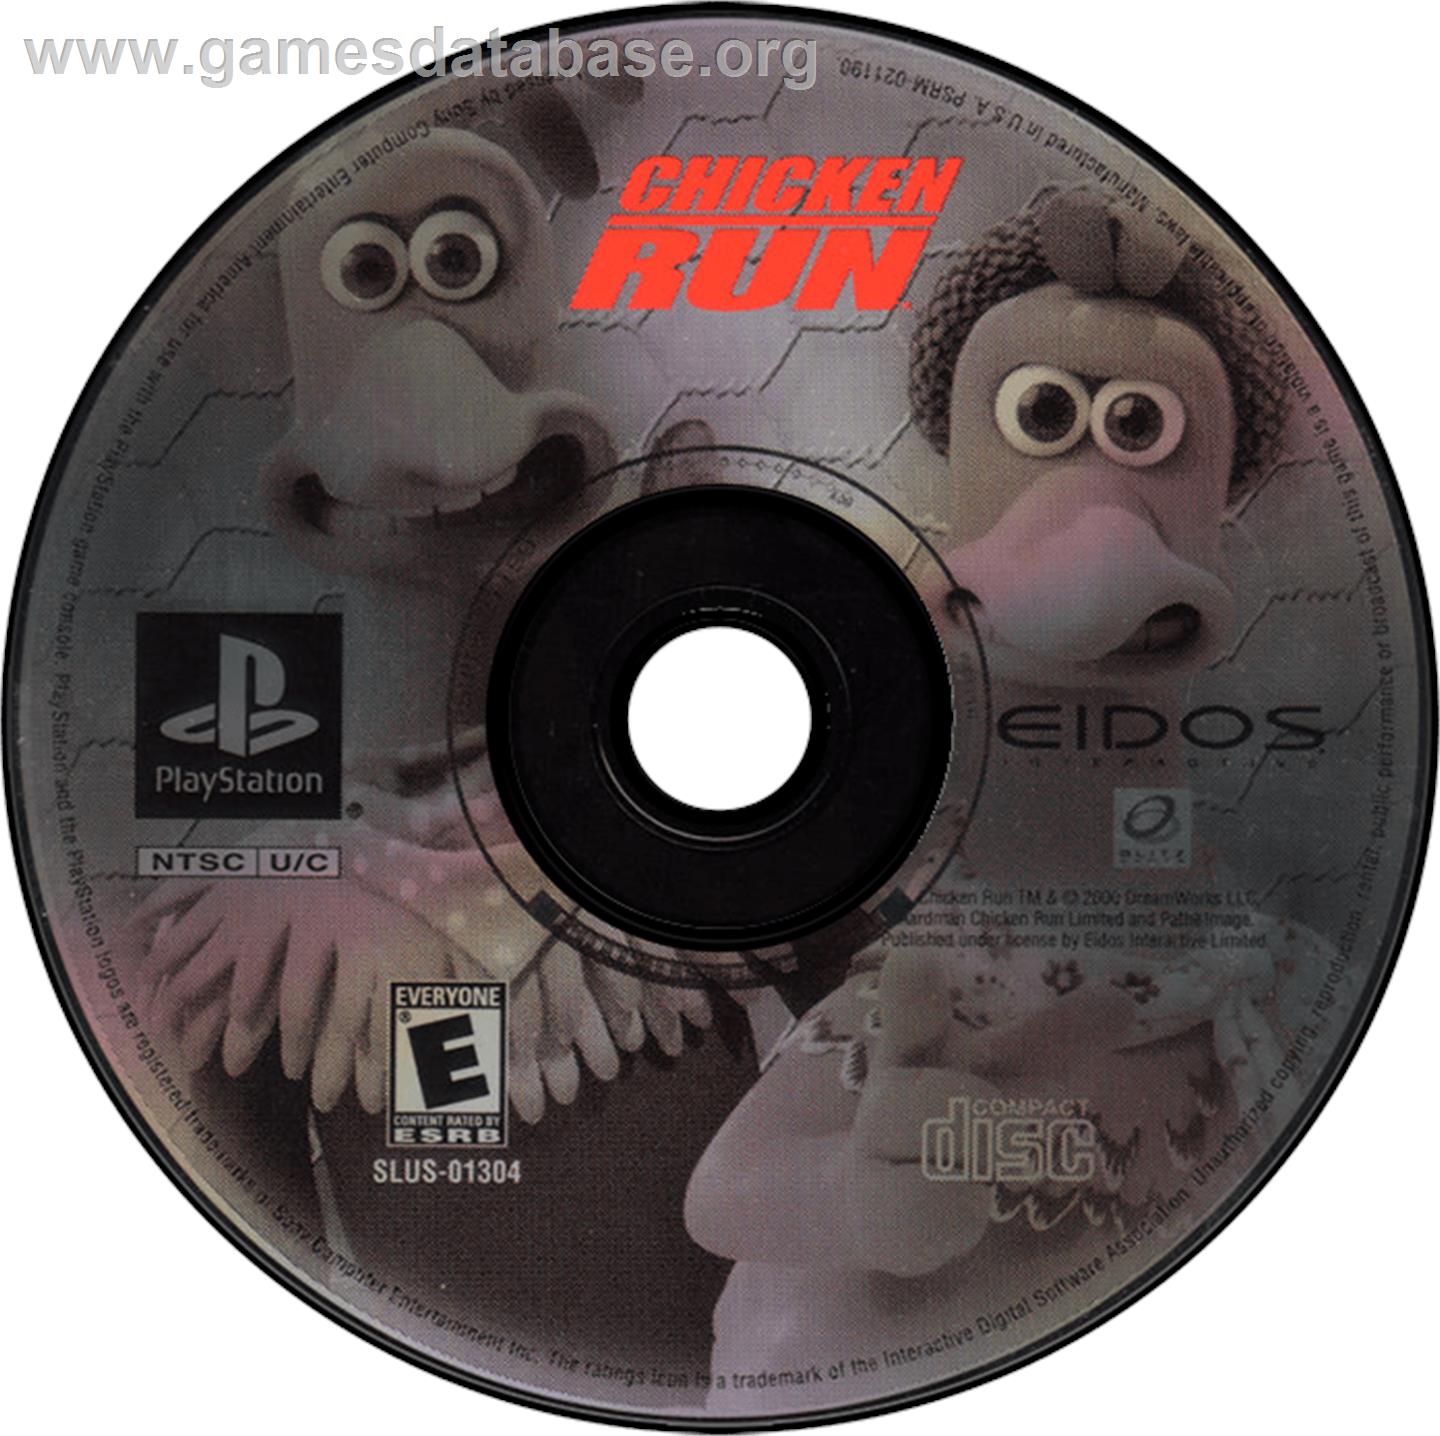 Chicken Run - Sony Playstation - Artwork - Disc